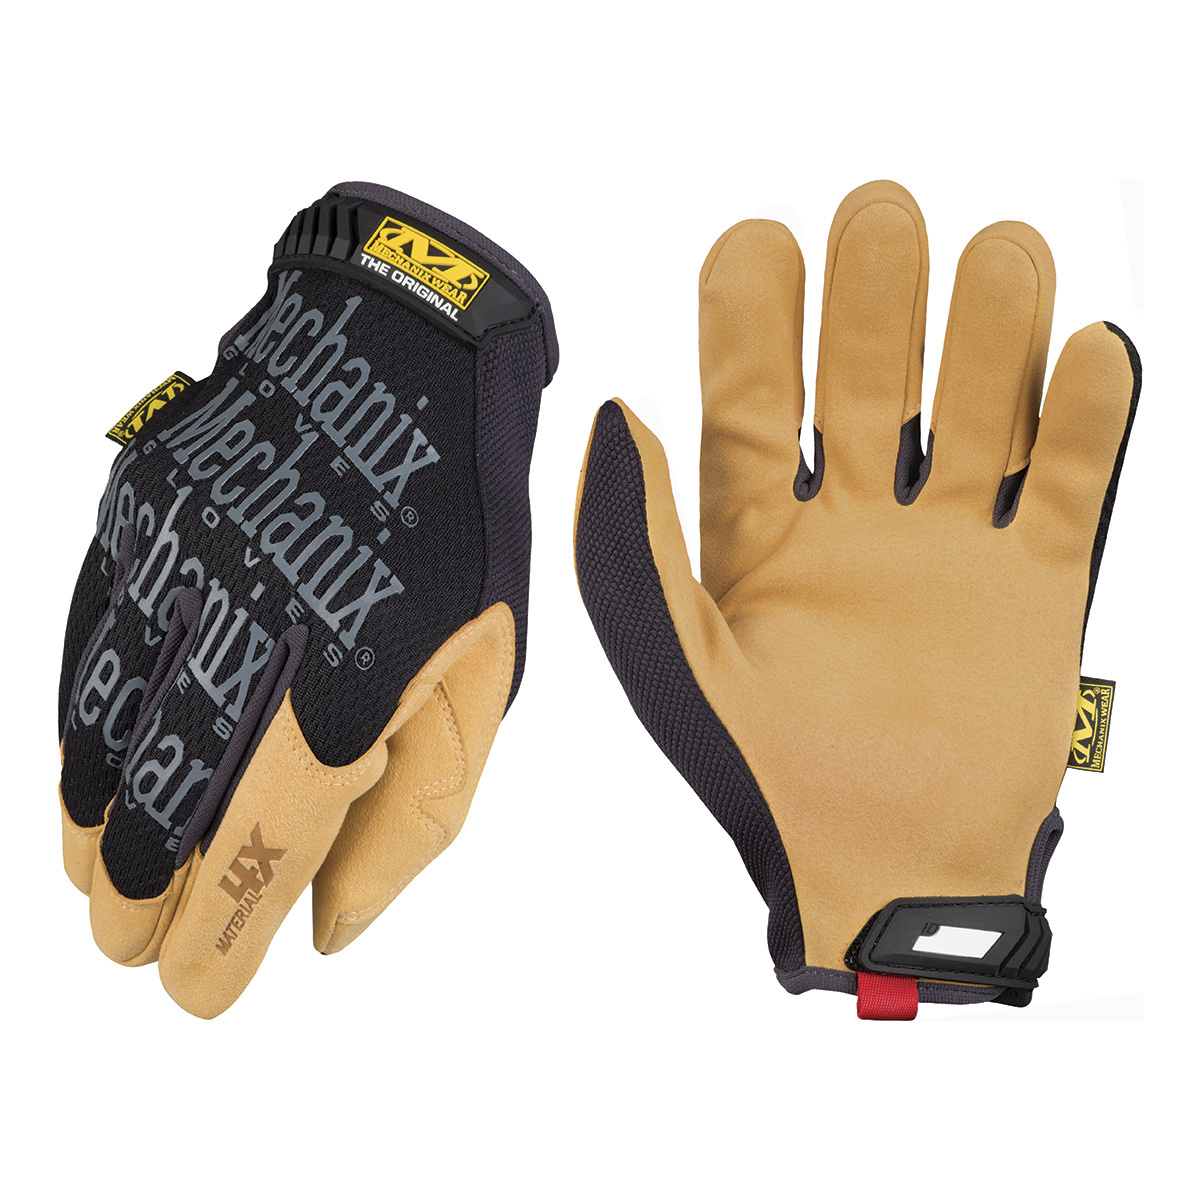 Wear gloves. Перчатки Mechanix Wear Original. Перчатки Mechanix Original Black\. Mechanix material4x m-Pact. Mechanix 4x fast Fit.